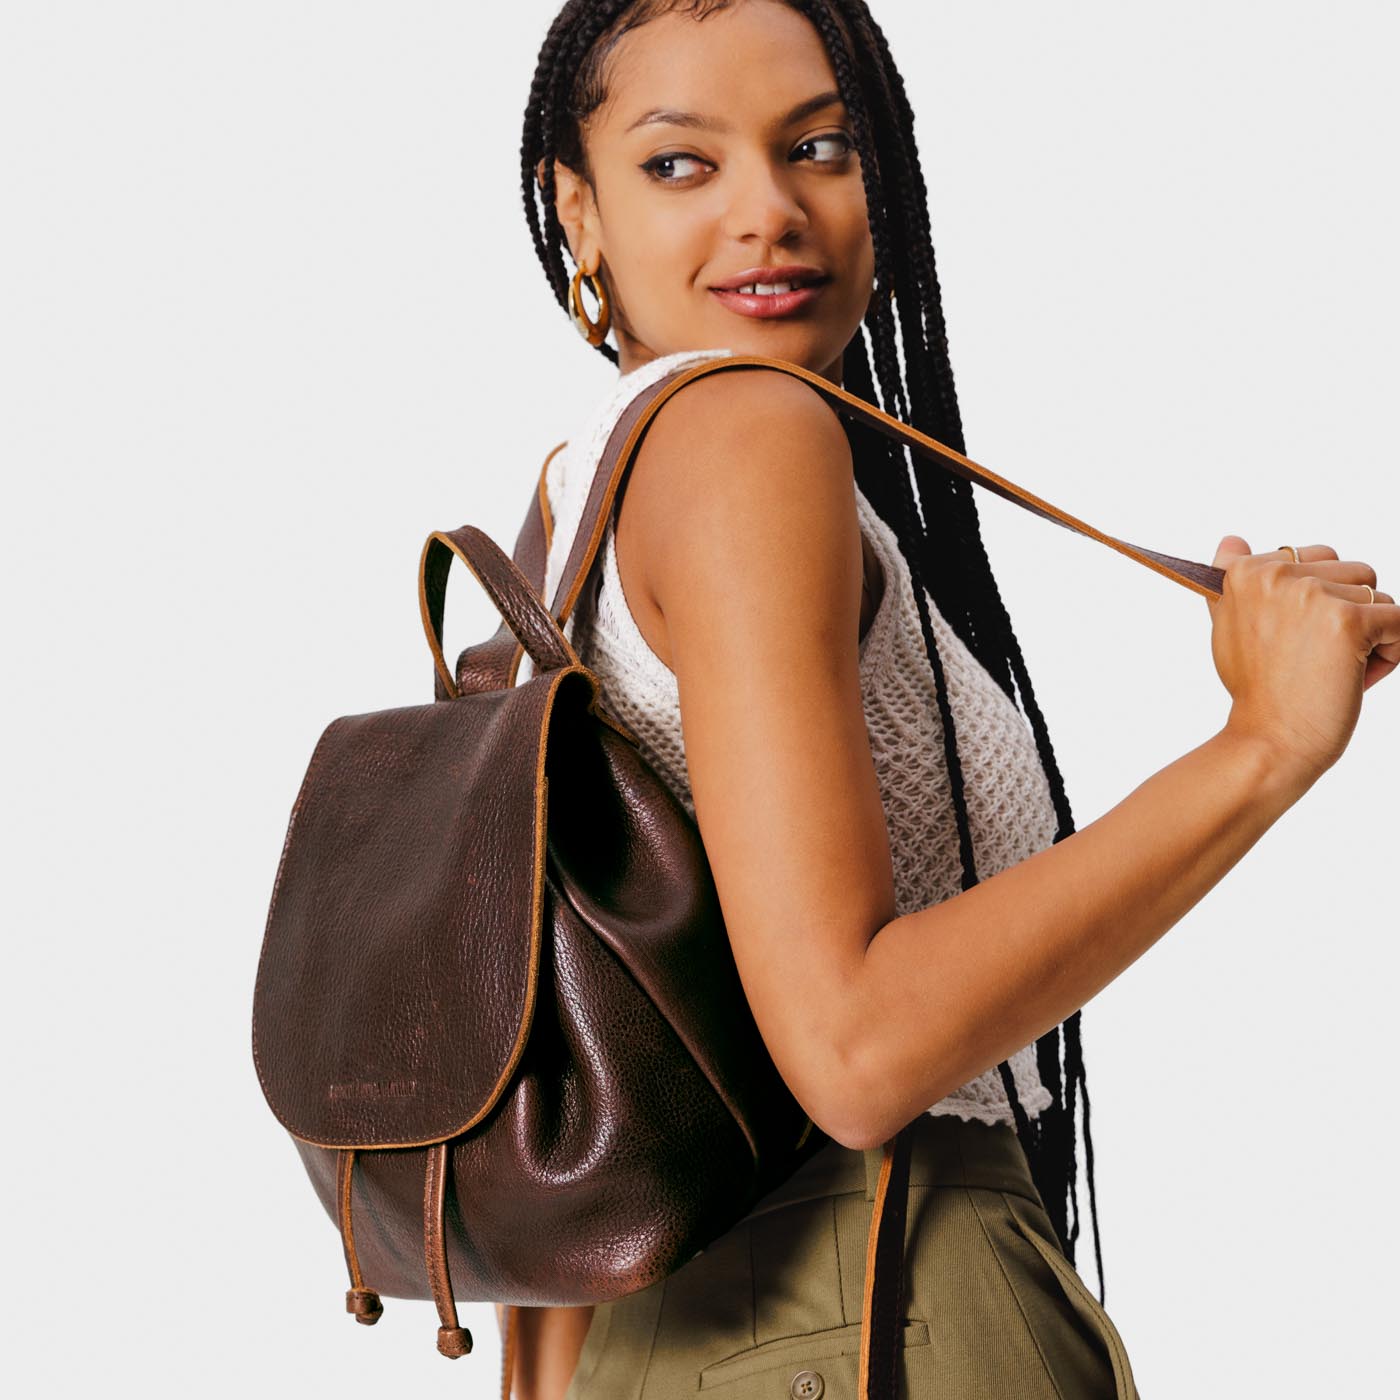 Brown CONVERTIBLE Backpack, Dark Brown Leather BACKPACK PURSE, Shoulder  Bag, Crossbody Leather Handbag, Leather Hobo Bag, School Bag - Etsy